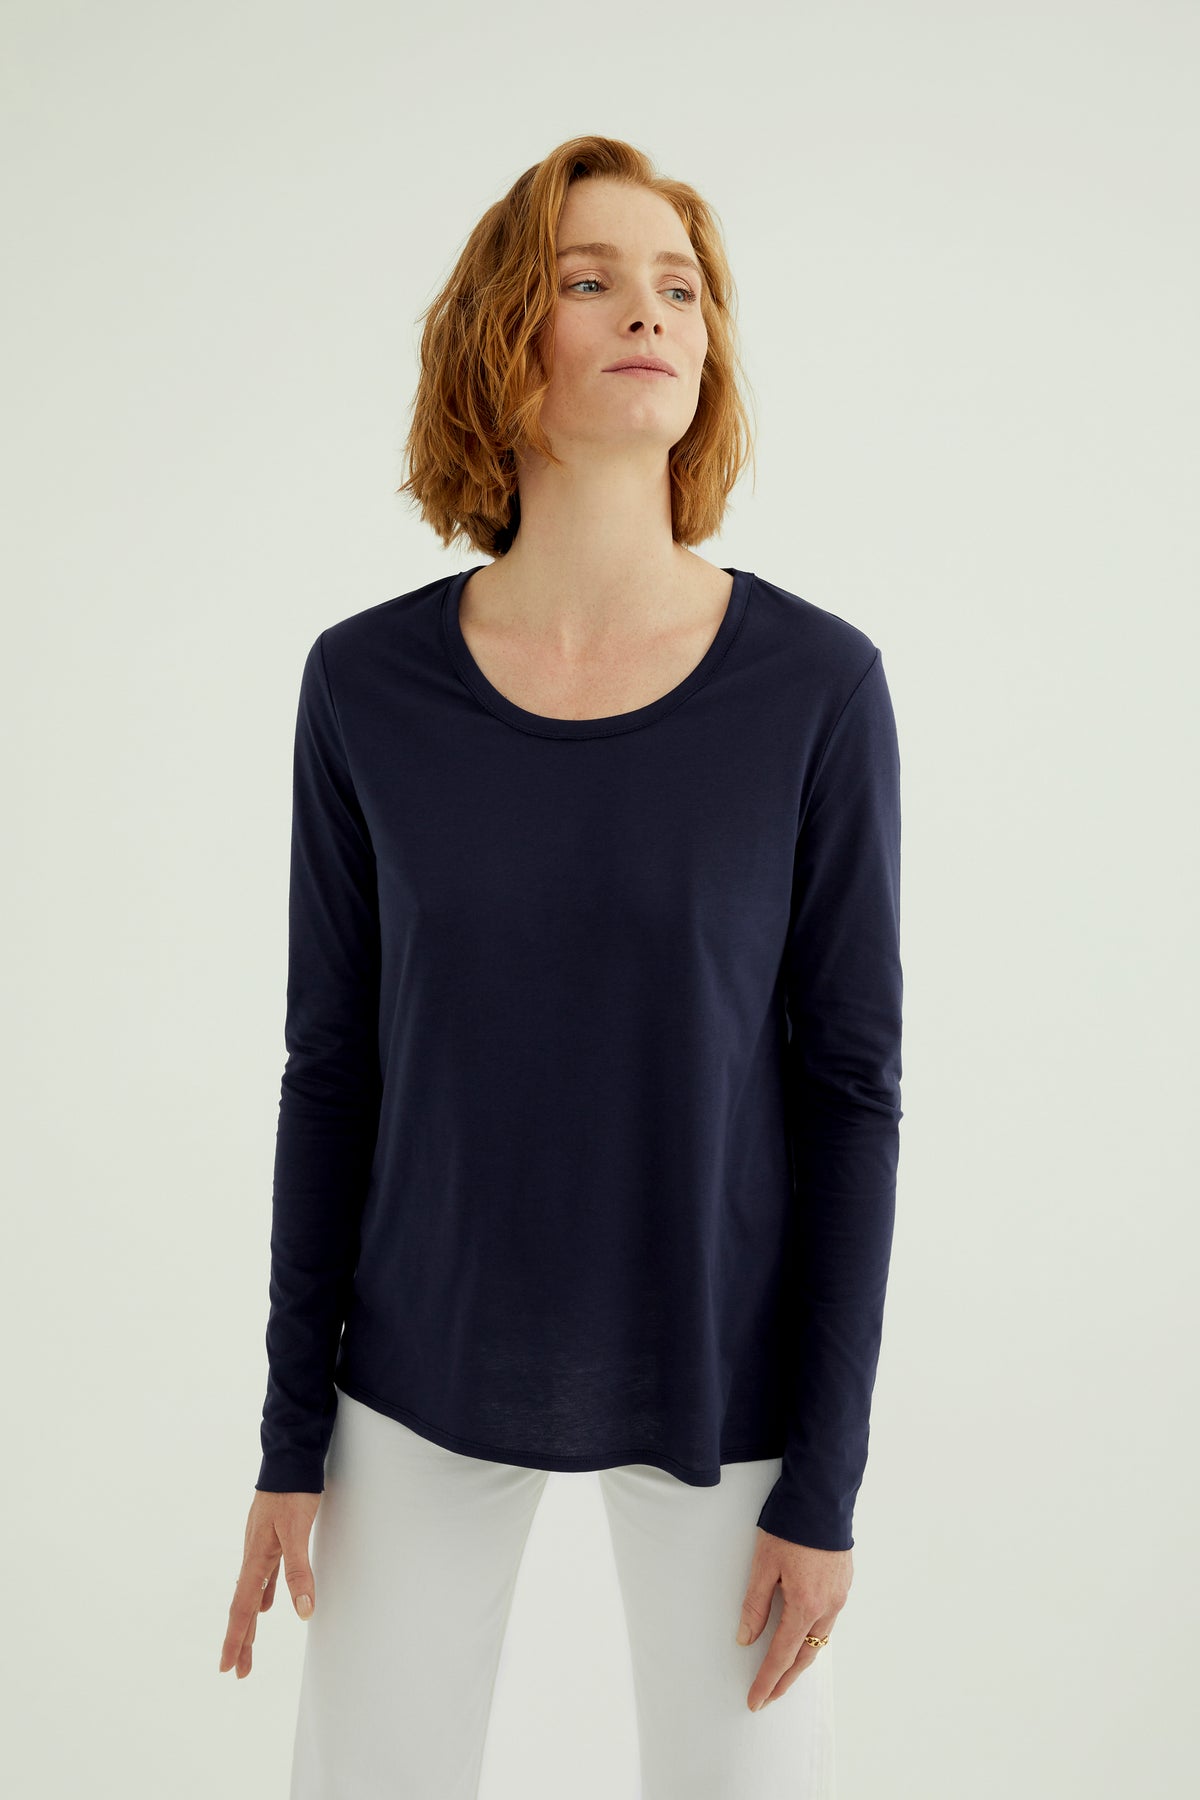 Women's Navy Blue Round Neck with Tulip Sleeve T-Shirt (36